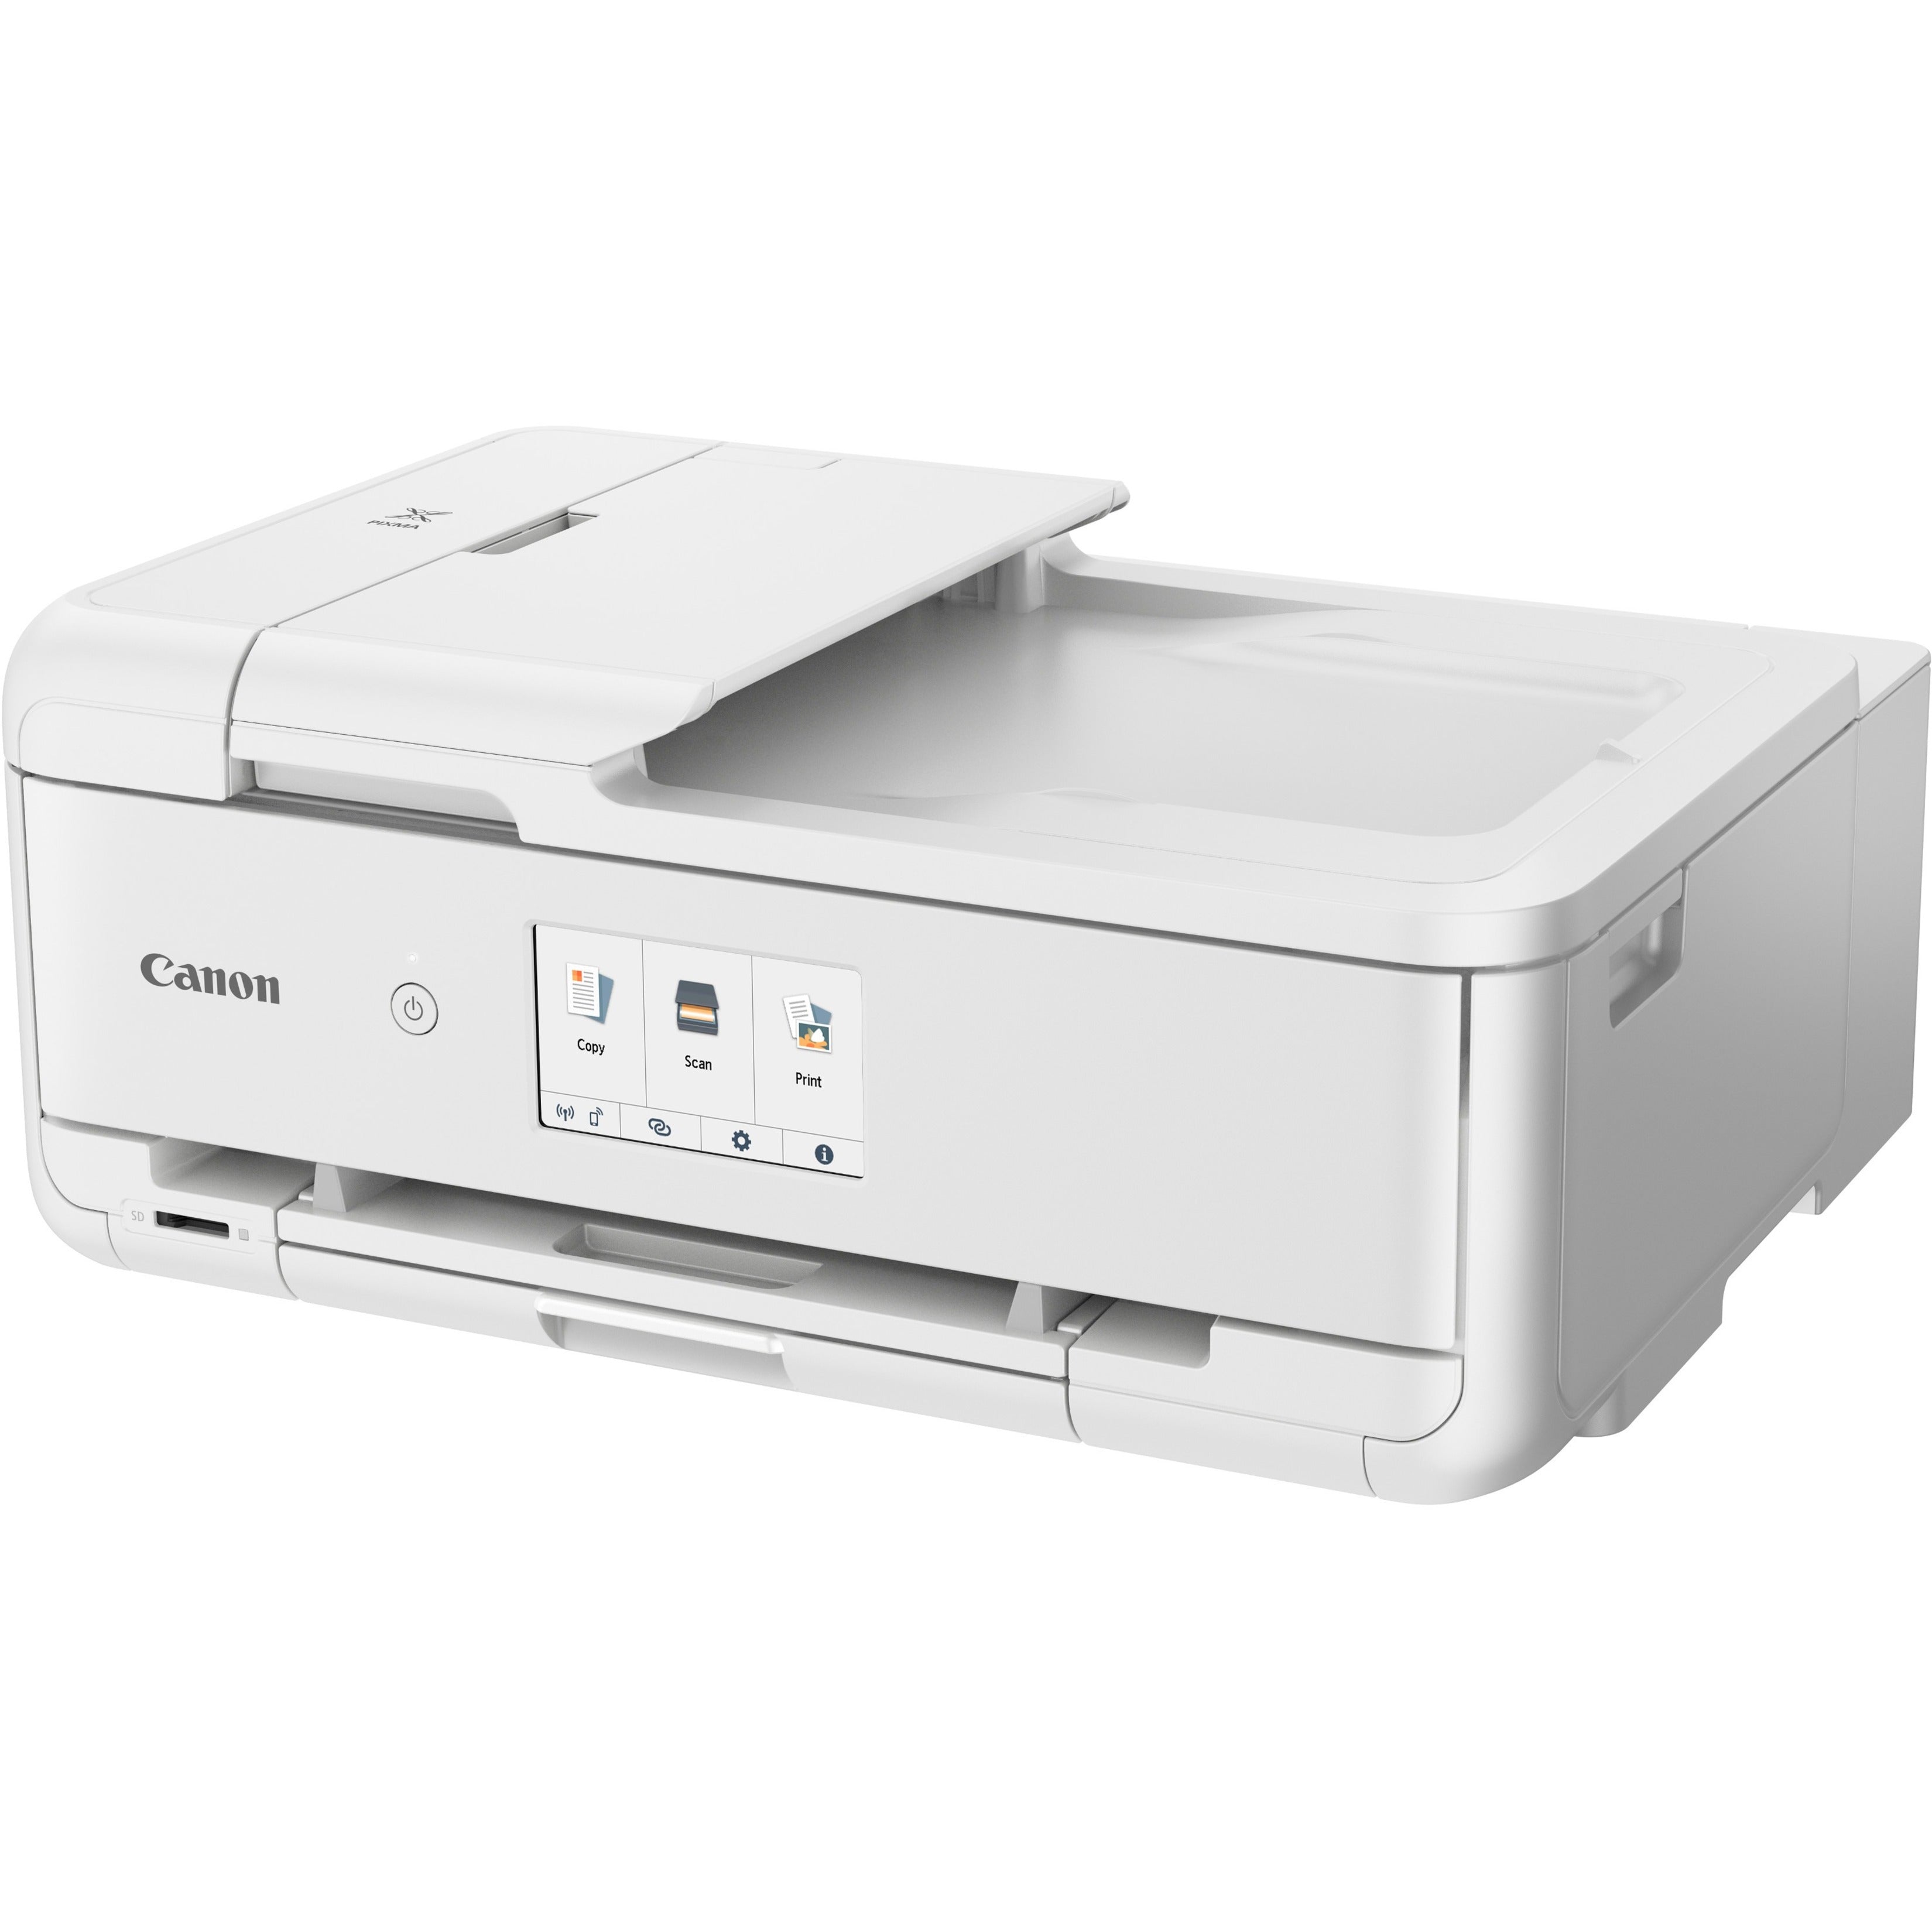 Canon 2988C022 PIXMA TS9521C Crafter's All-In-One Printer, Wireless, Color, 4800 x 1200 dpi